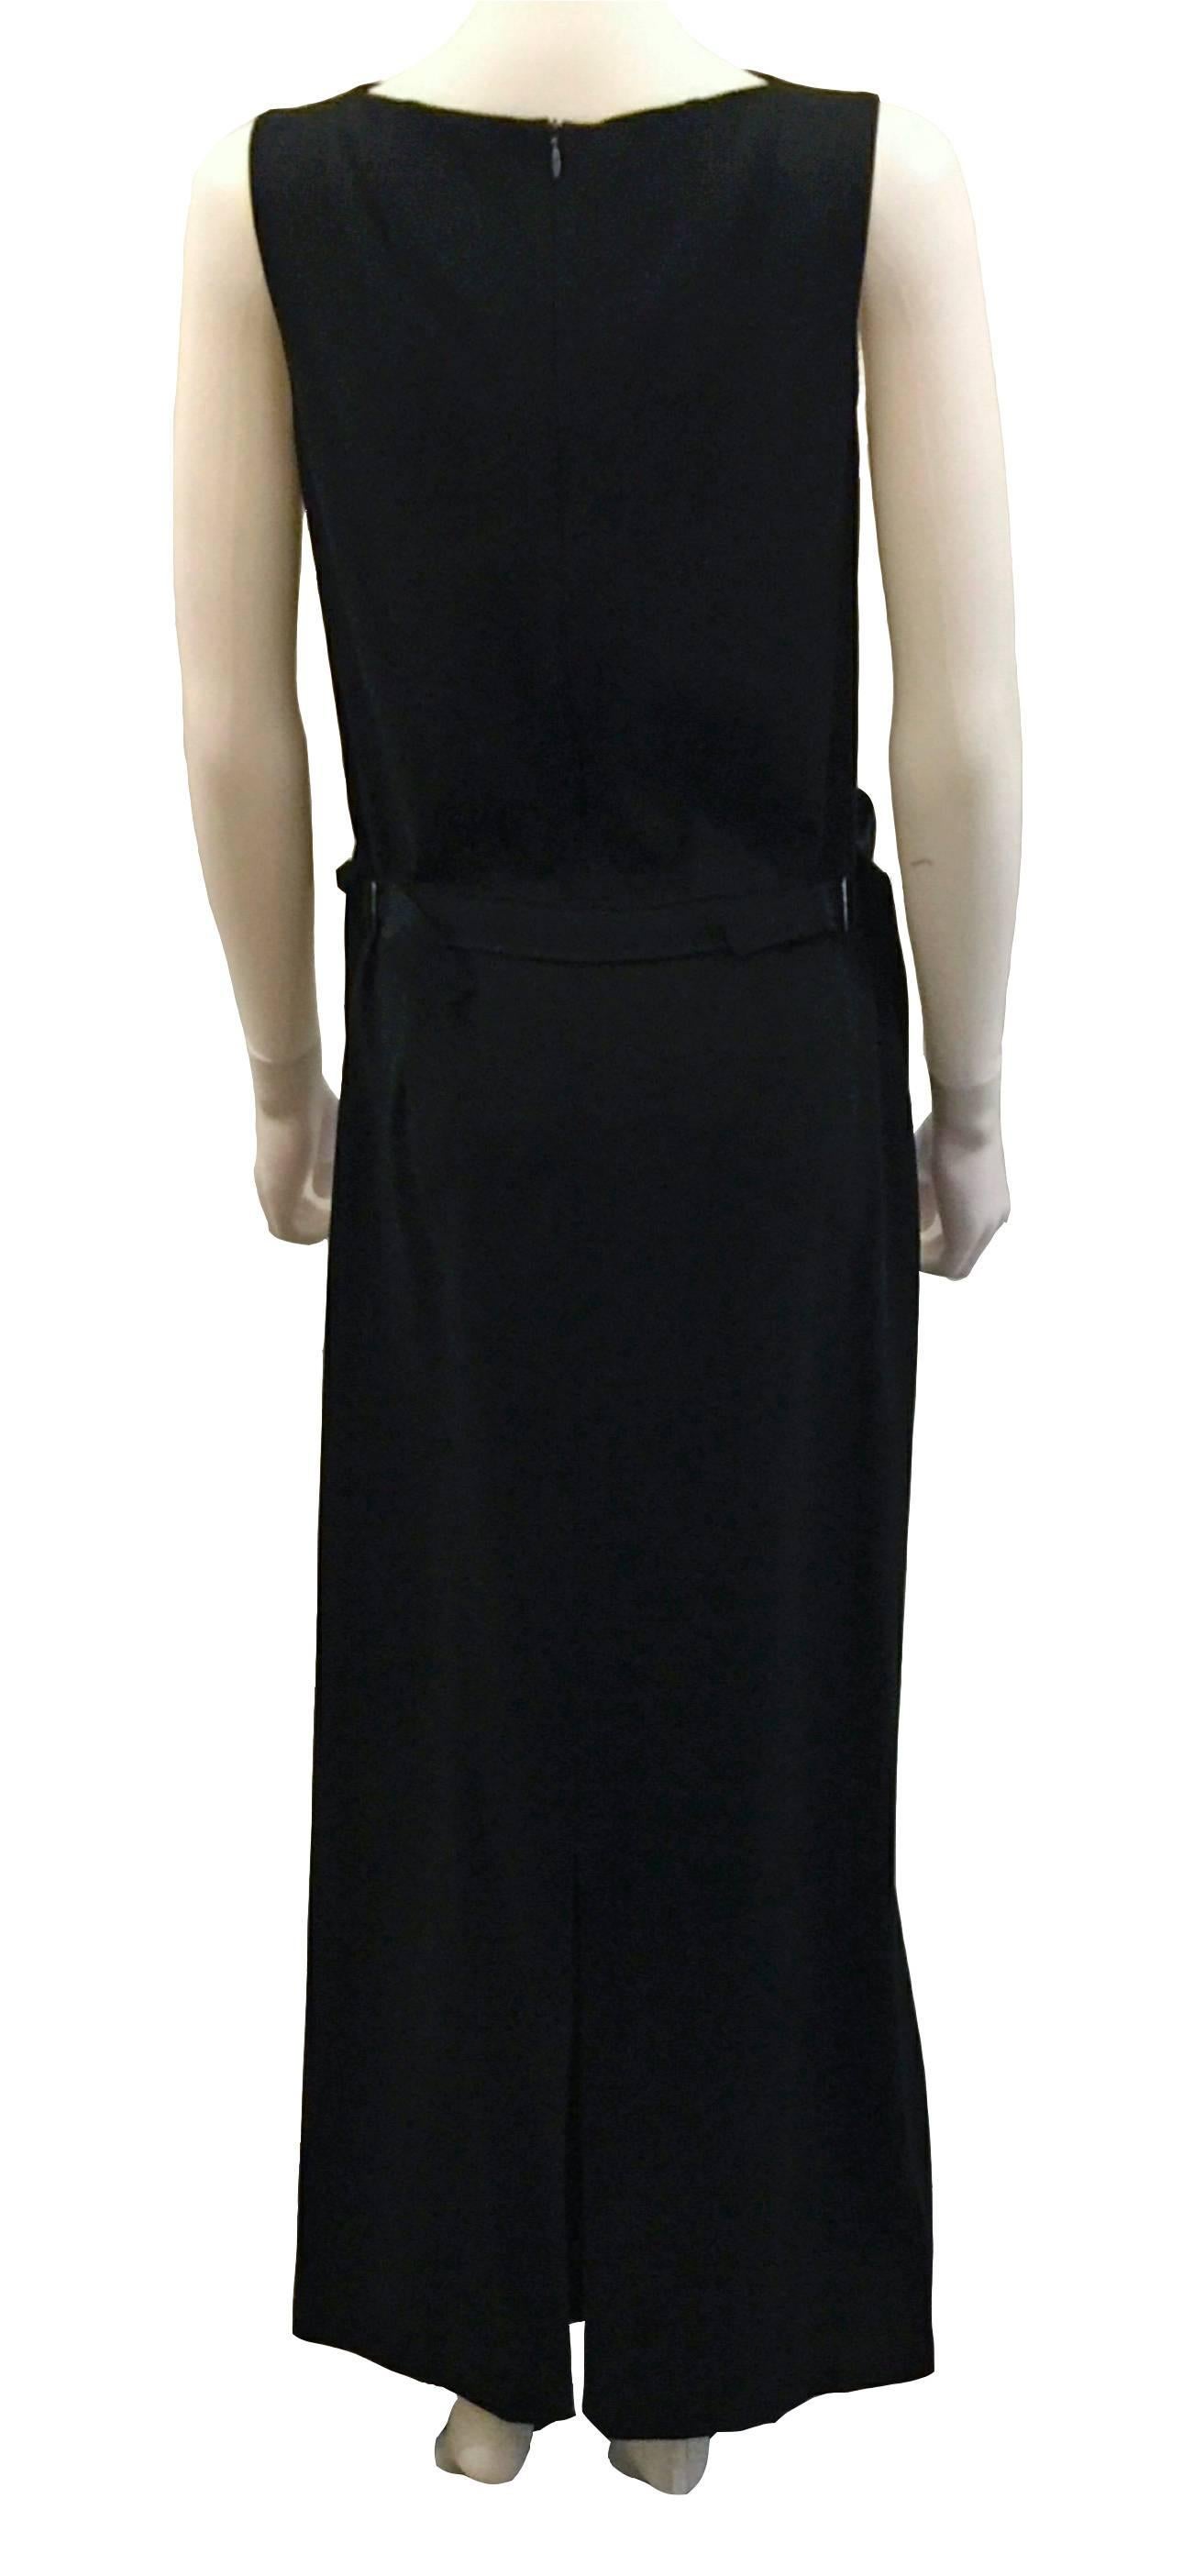 Black Jil Sander stylish long black dress.  